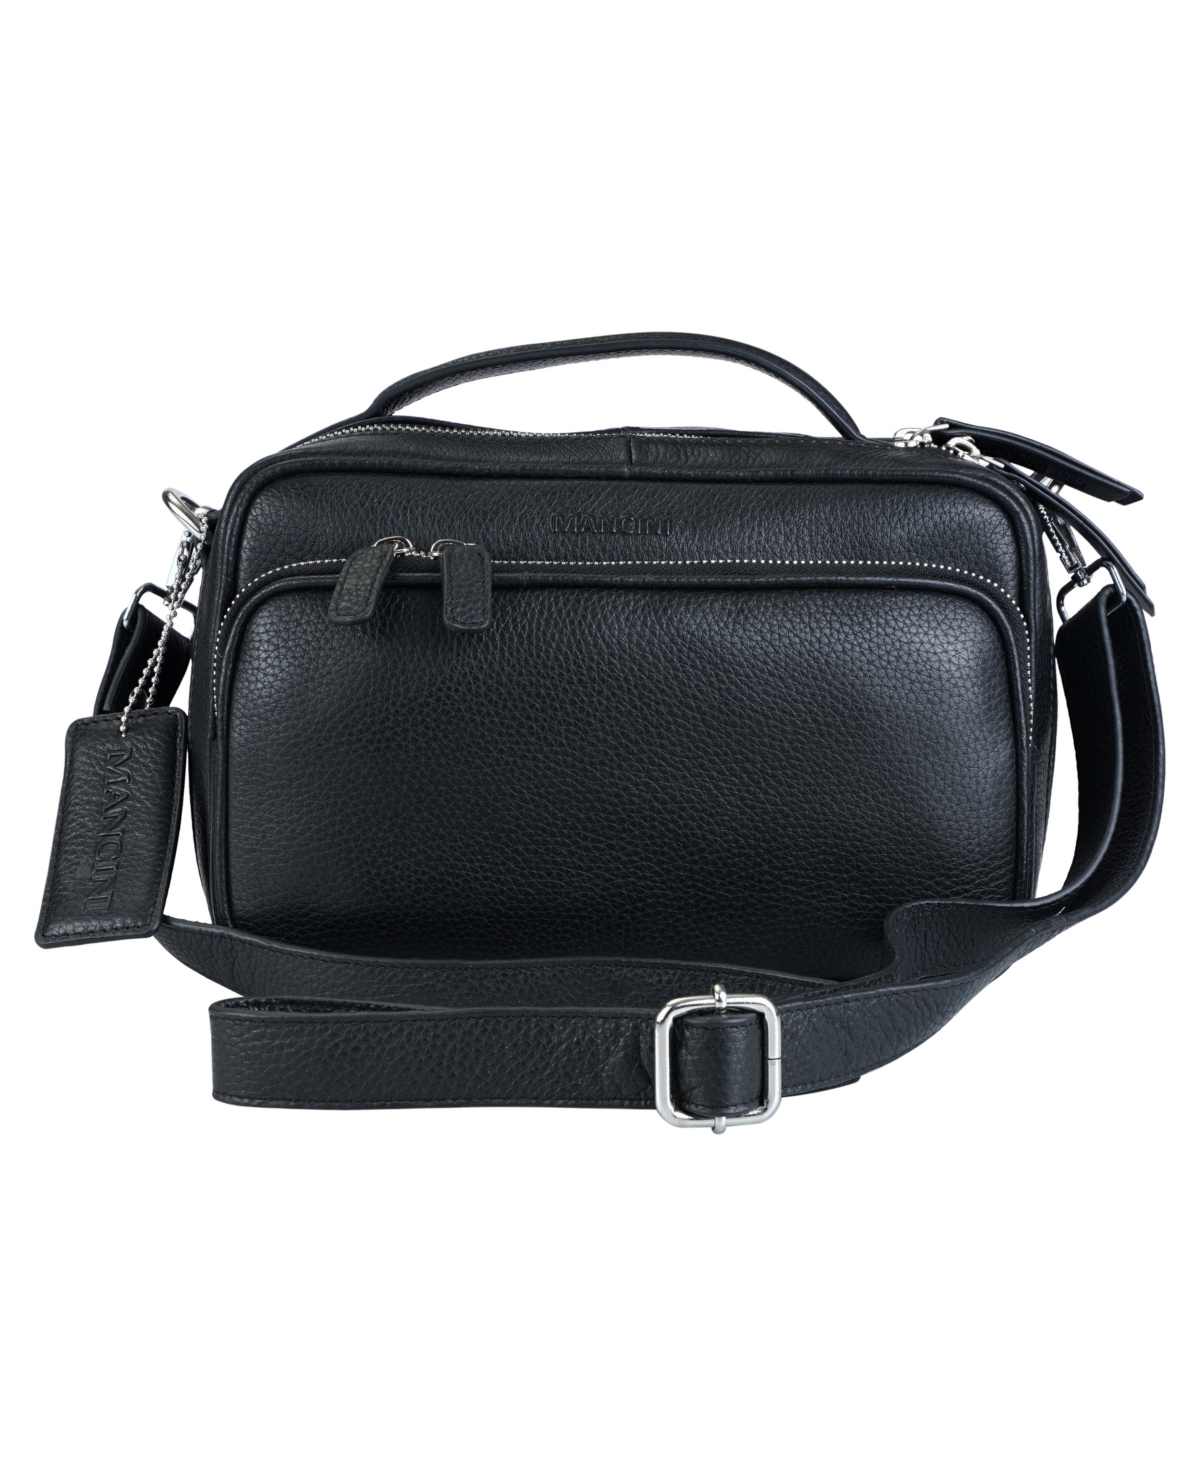 Mancini Pebbled Collection Julianna Leather Crossbody Satchel Bag In Black